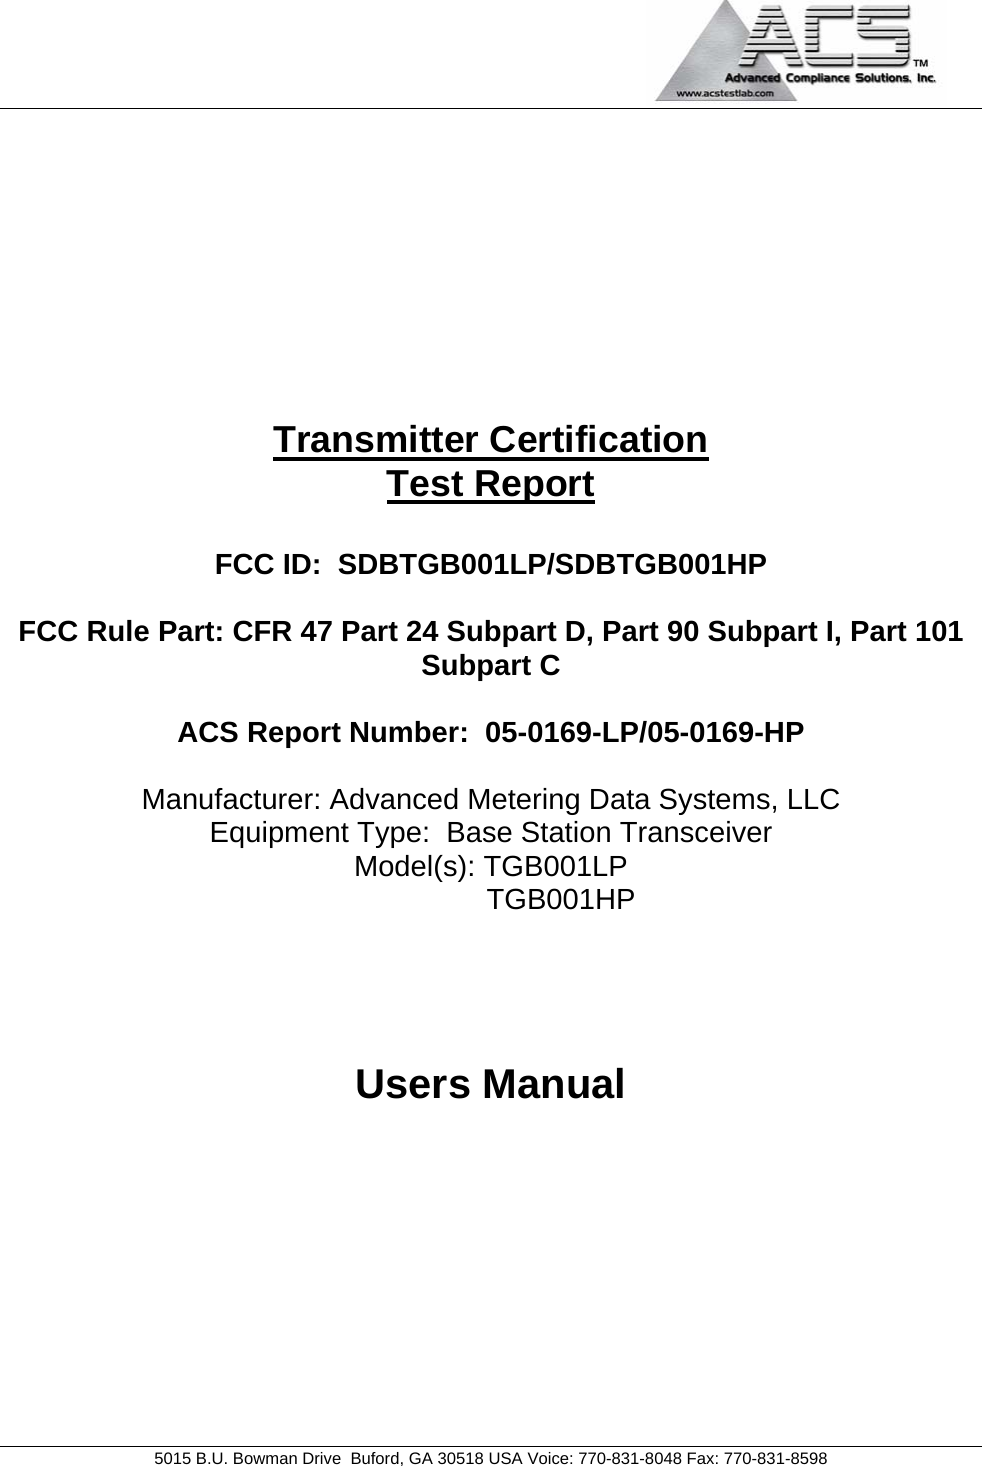                                             5015 B.U. Bowman Drive  Buford, GA 30518 USA Voice: 770-831-8048 Fax: 770-831-8598   Transmitter Certification Test Report  FCC ID:  SDBTGB001LP/SDBTGB001HP  FCC Rule Part: CFR 47 Part 24 Subpart D, Part 90 Subpart I, Part 101 Subpart C  ACS Report Number:  05-0169-LP/05-0169-HP   Manufacturer: Advanced Metering Data Systems, LLC Equipment Type:  Base Station Transceiver Model(s): TGB001LP         TGB001HP    Users Manual  